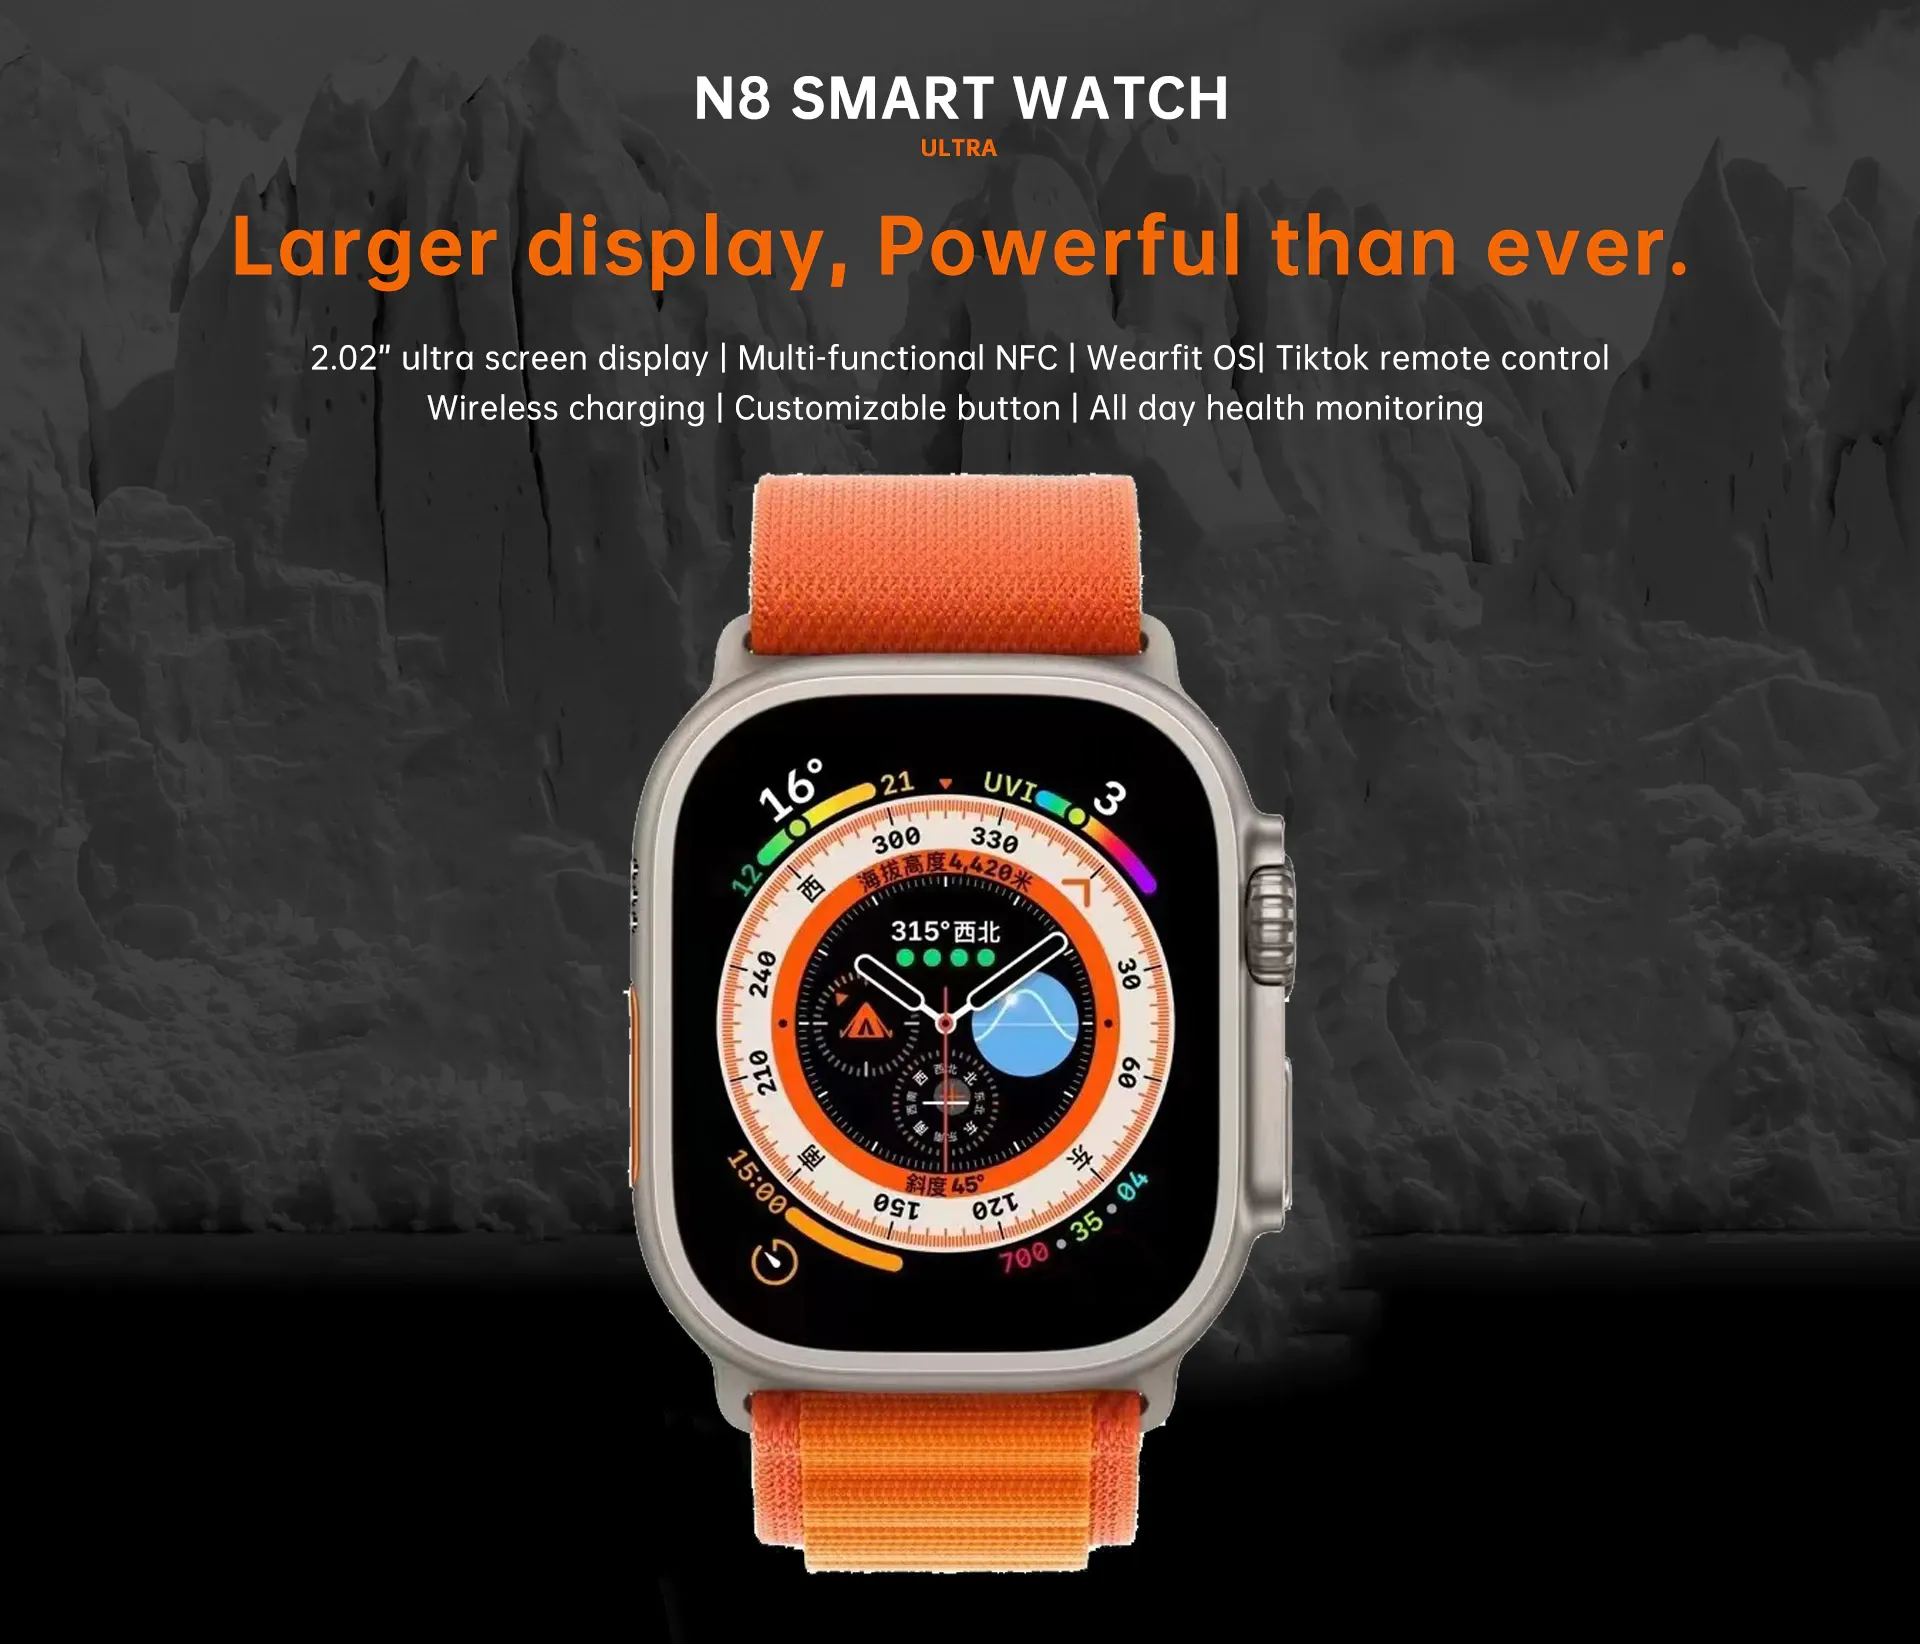 Buy n8 Ultra Smart watch at best price in Pakistan | Rhizmall.pk